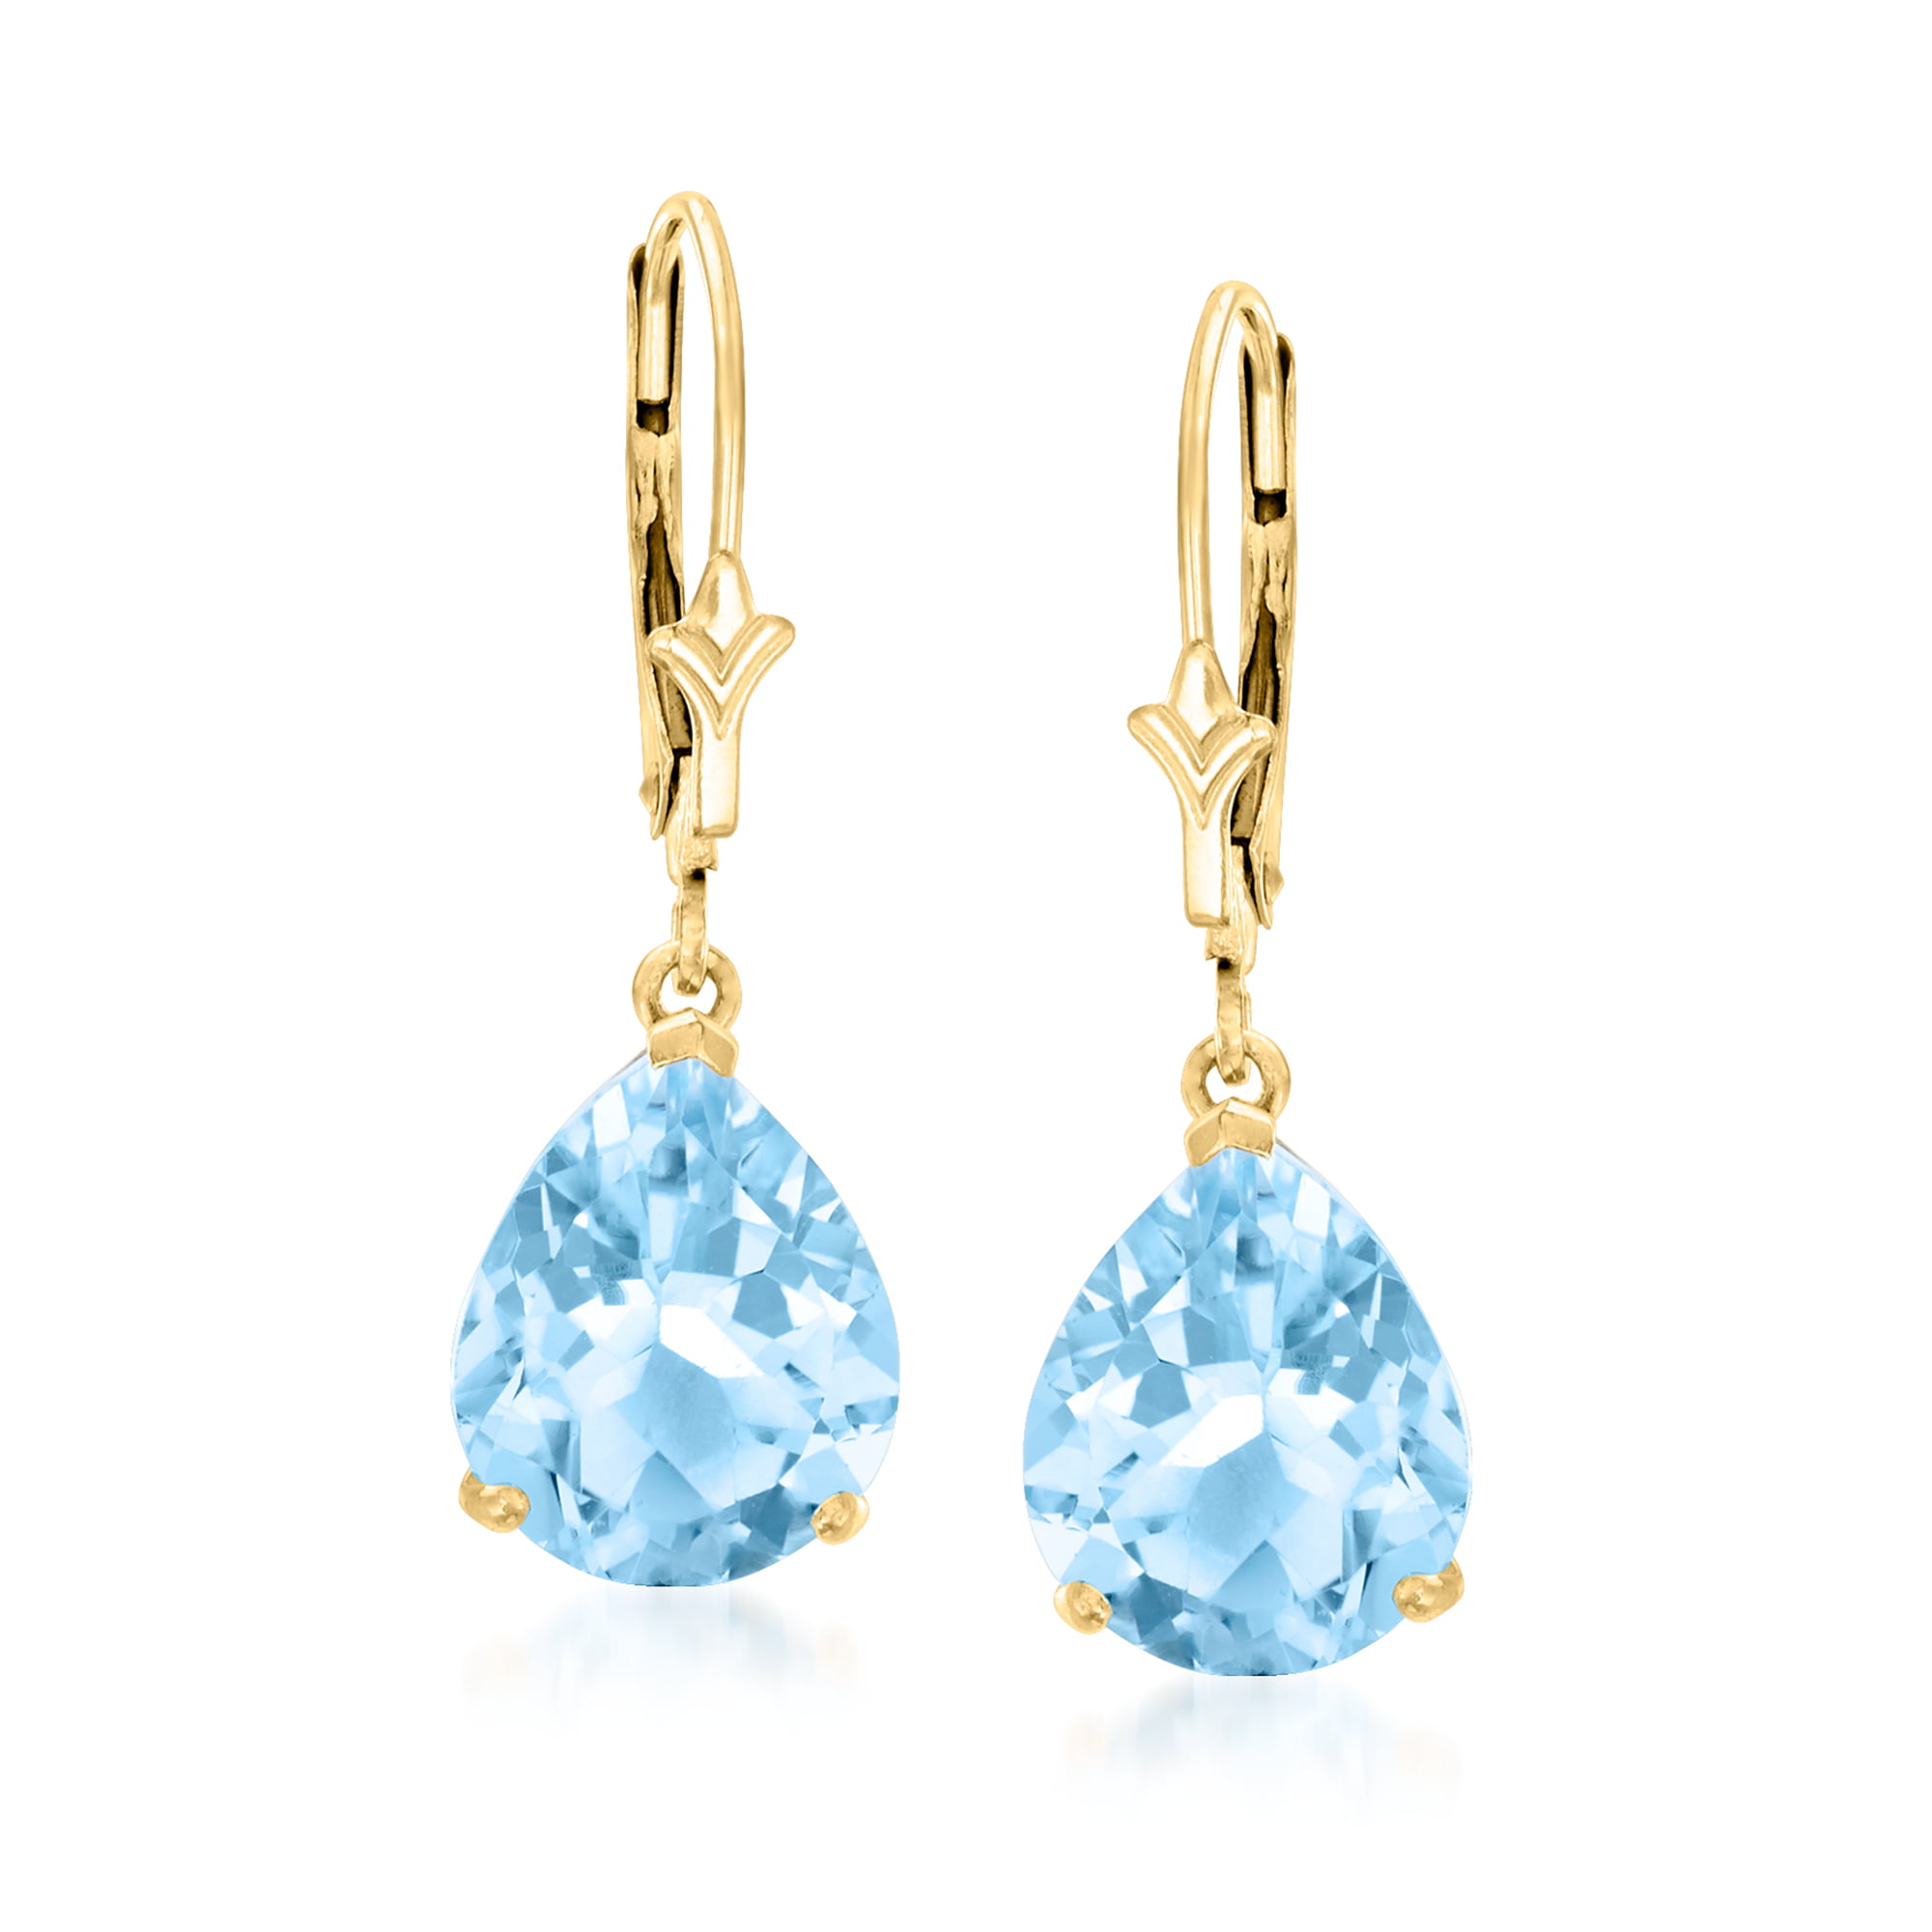 Details about   3 ct Princess Cut Solitaire Studs Sky Blue Topaz Gem 18k White Gold Earrings 